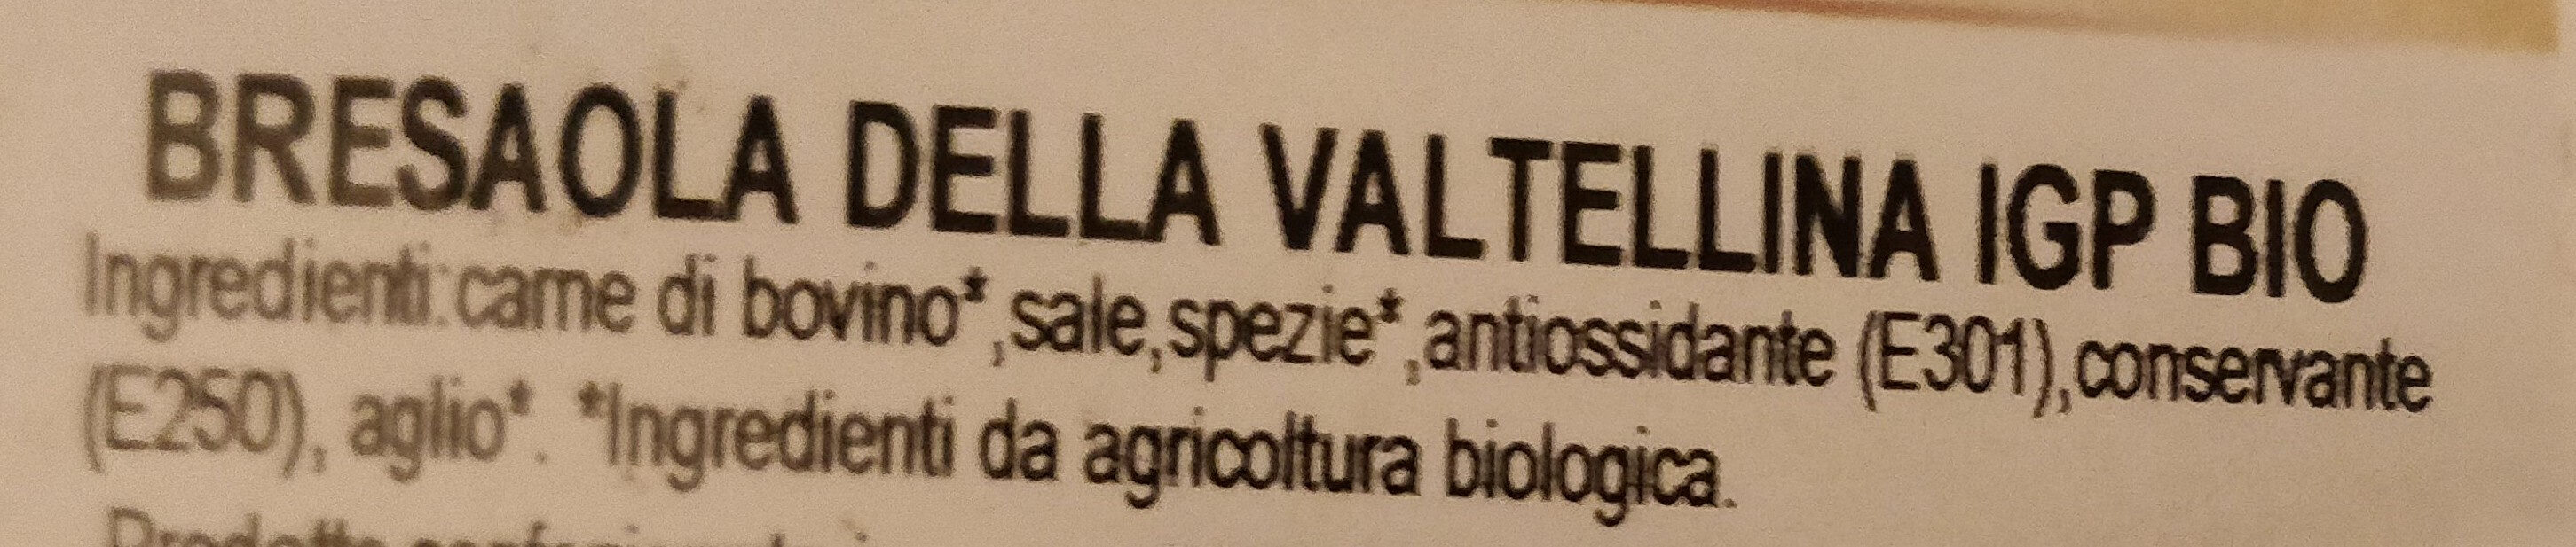 Bresaola Bio Valtellina IGP - Ingredienti